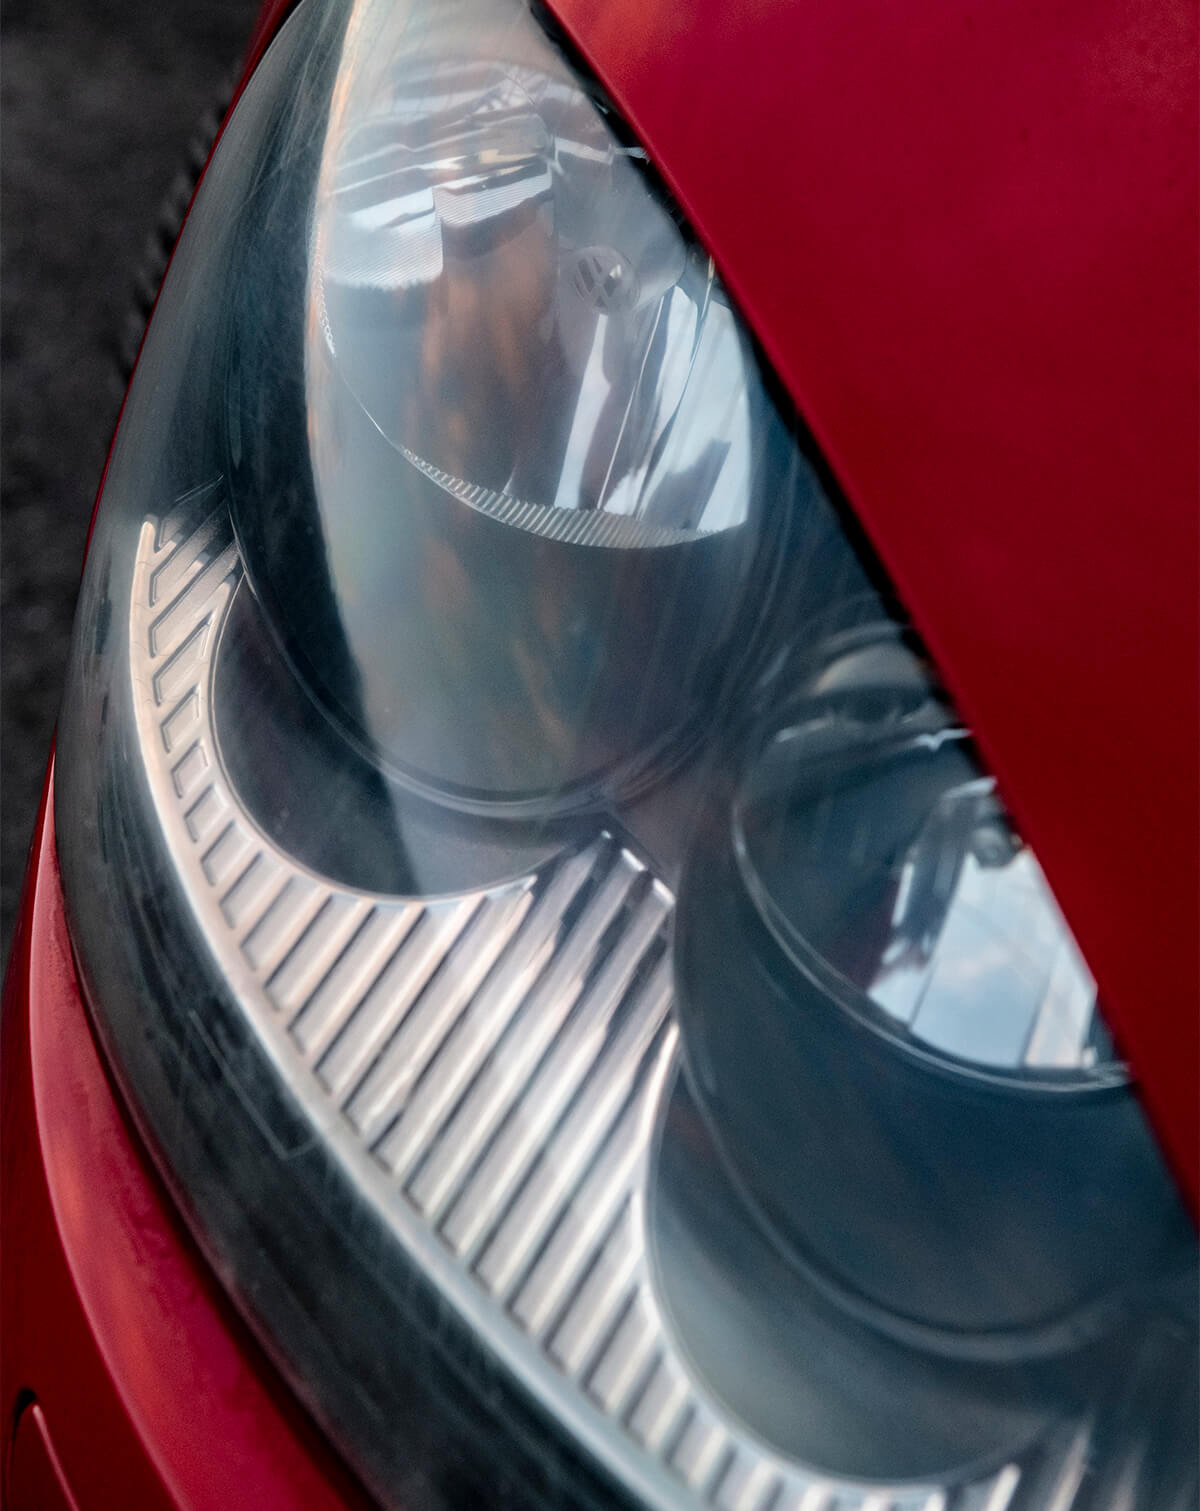 3 Costly Myths About Car Headlight Restoration